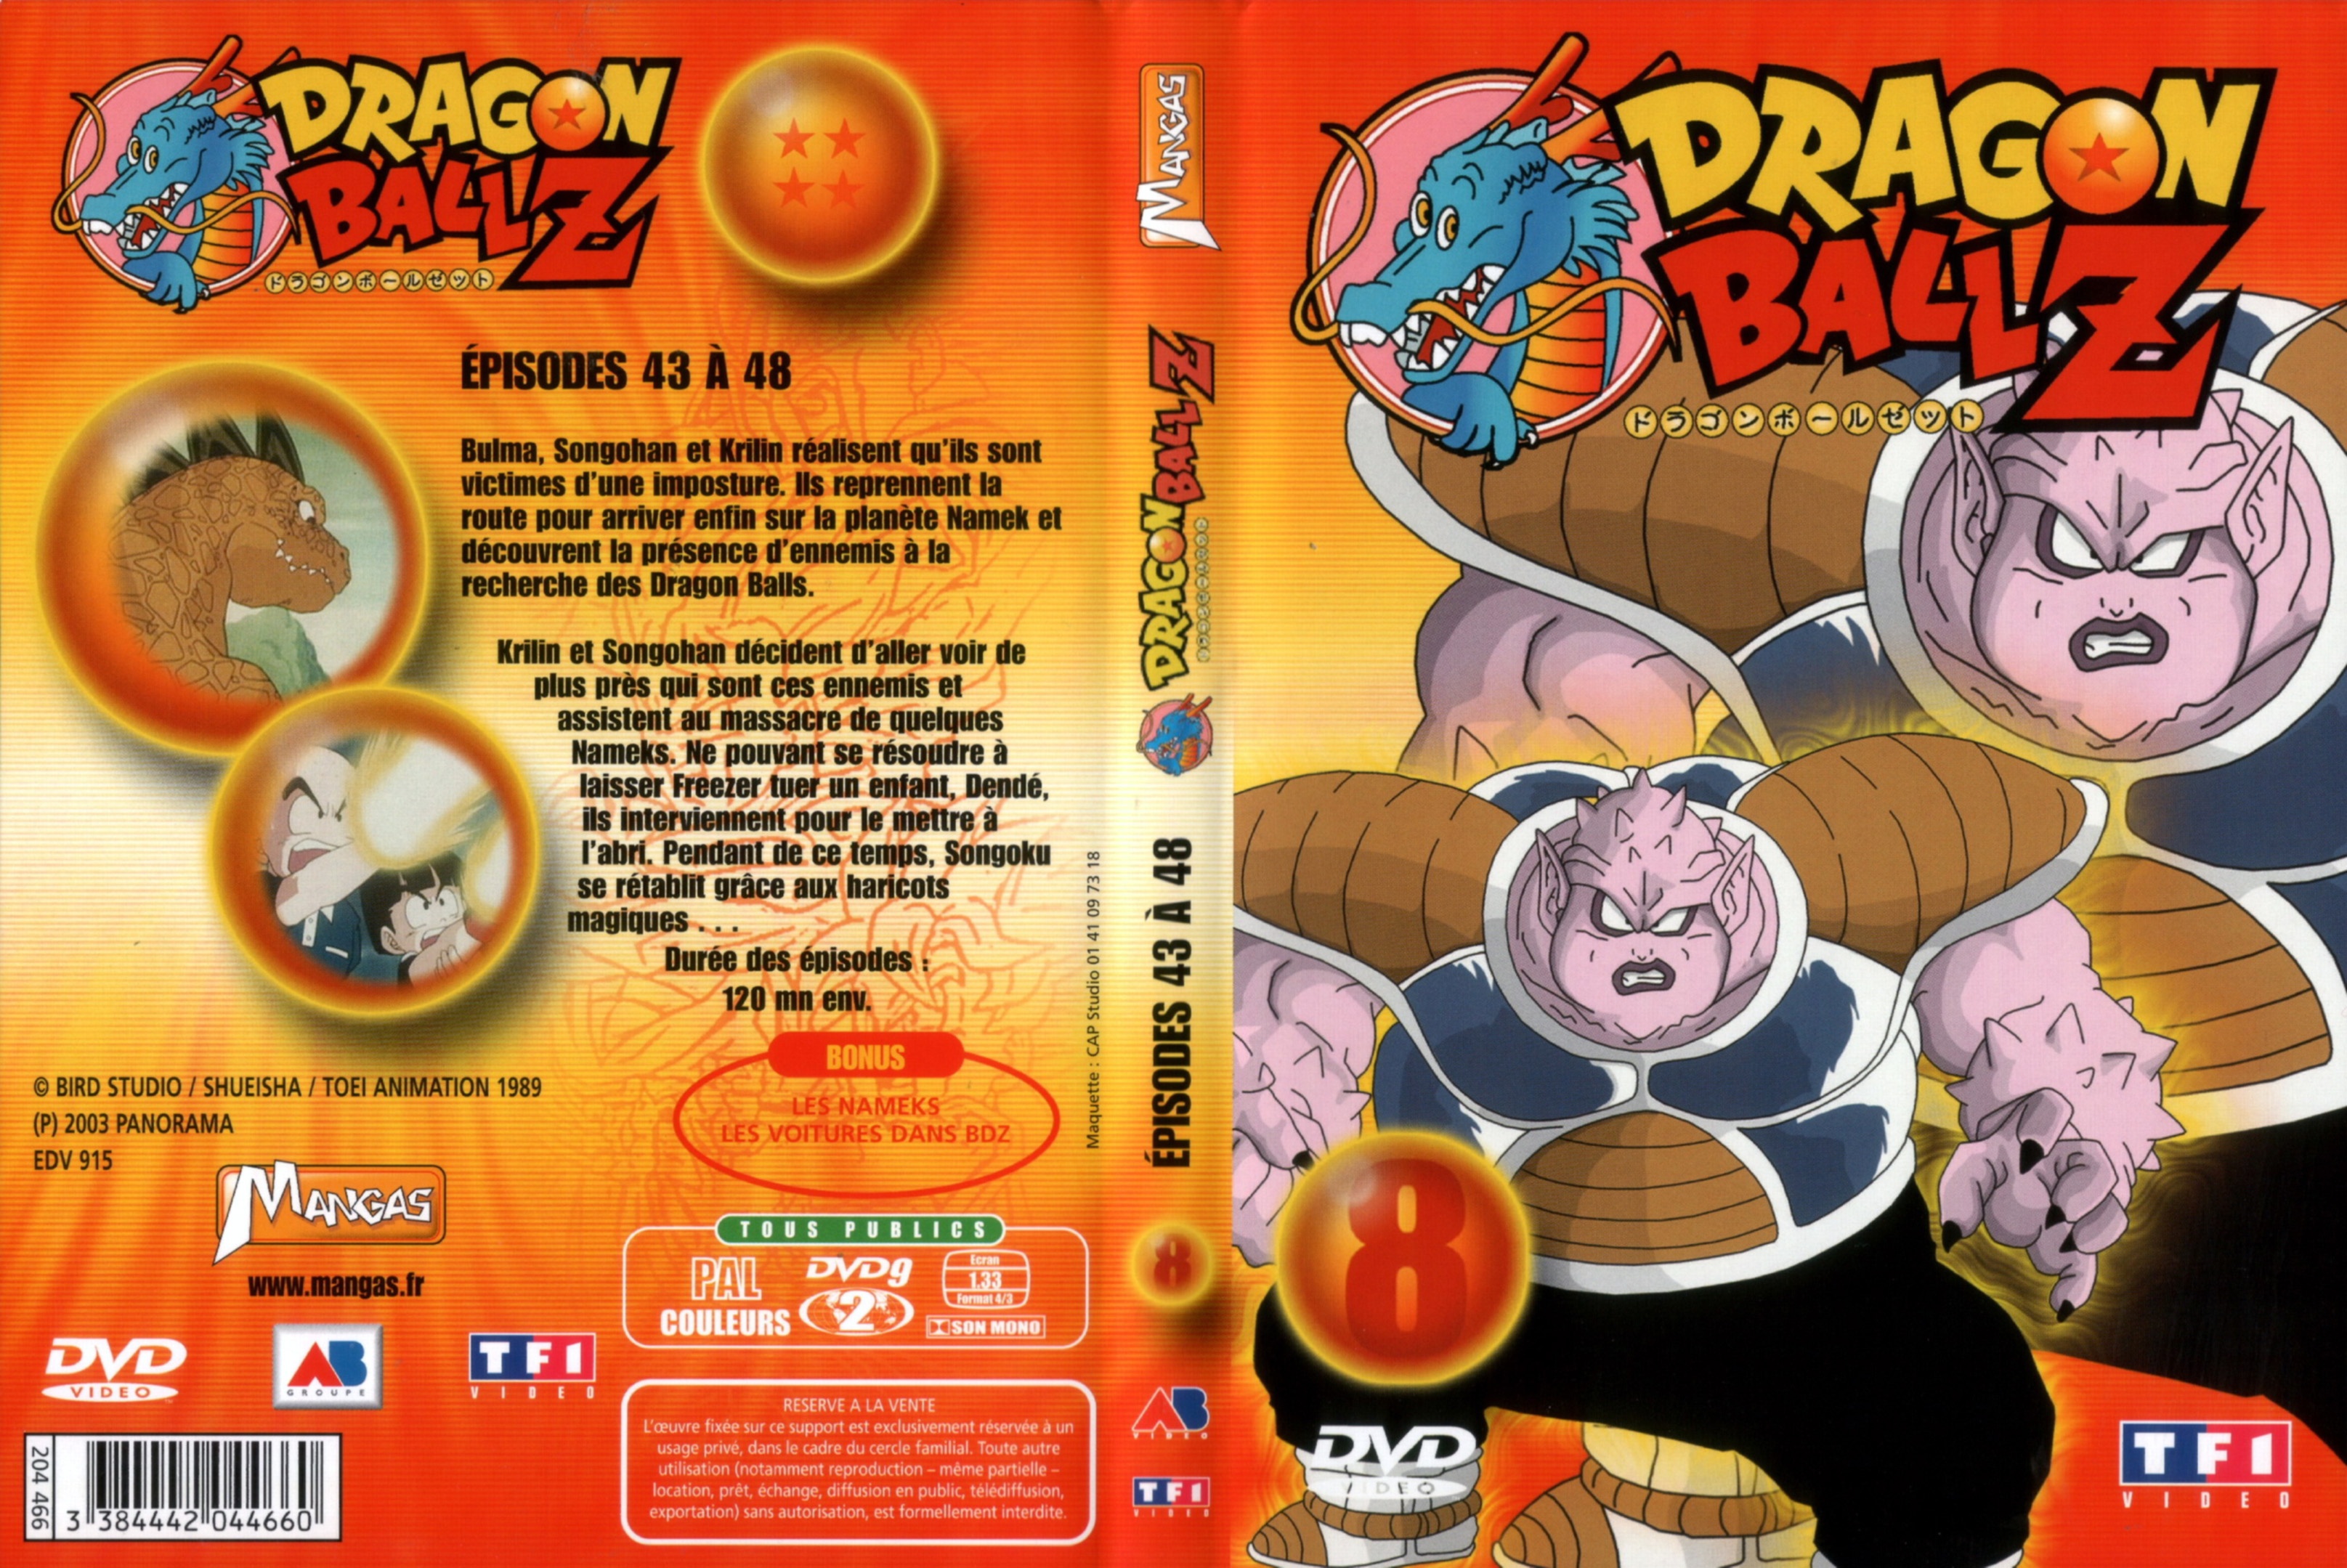 Jaquette DVD Dragon ball Z vol 08